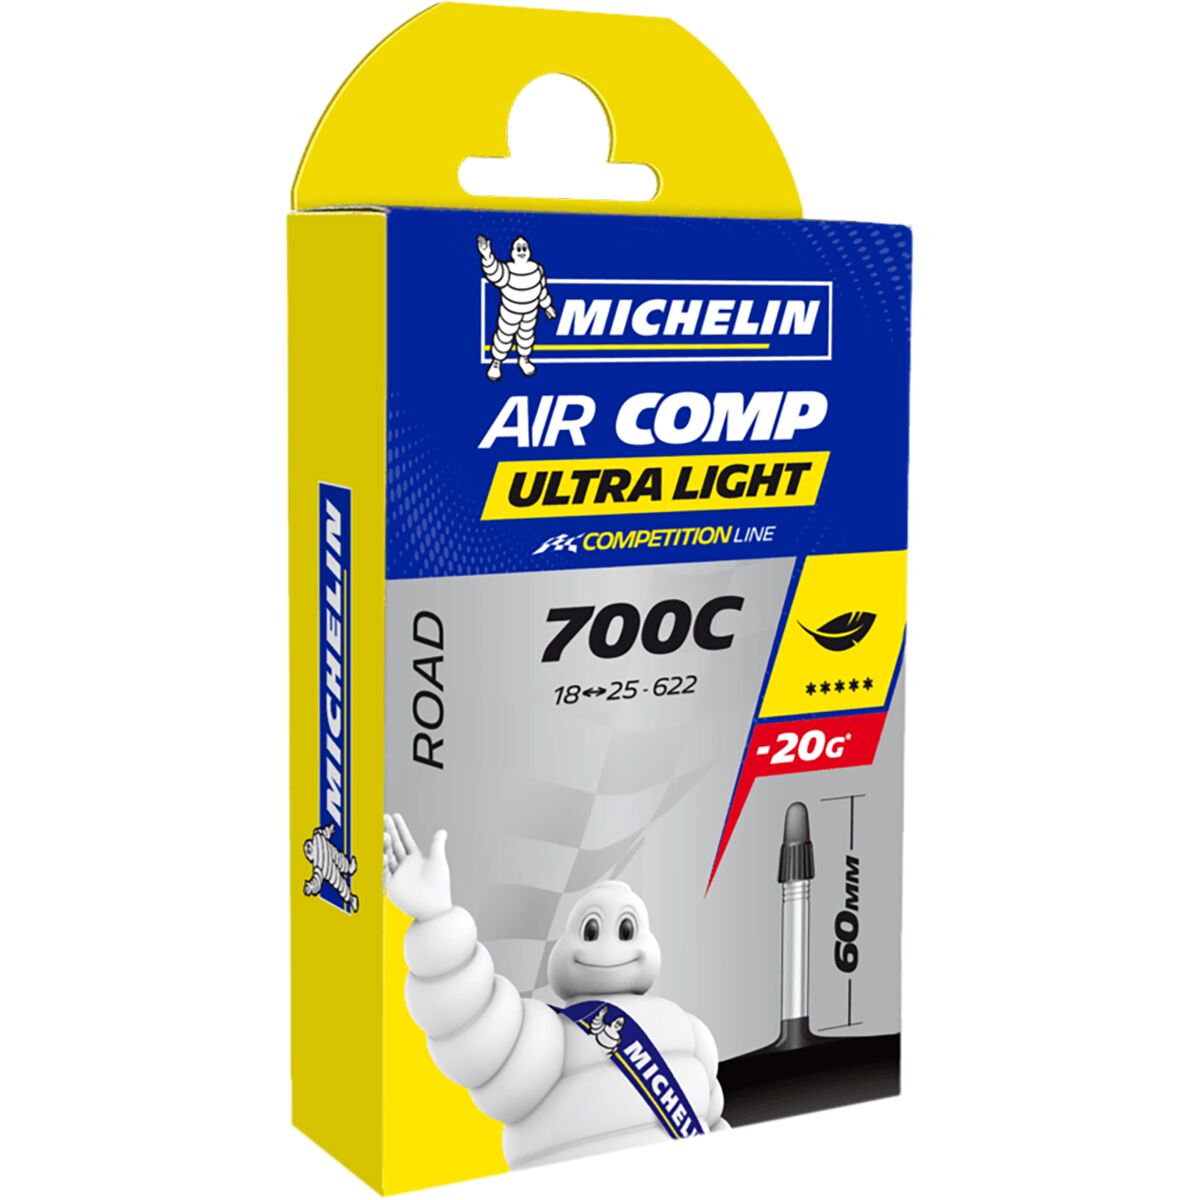 Michelin AirComp Ultra Light Tube